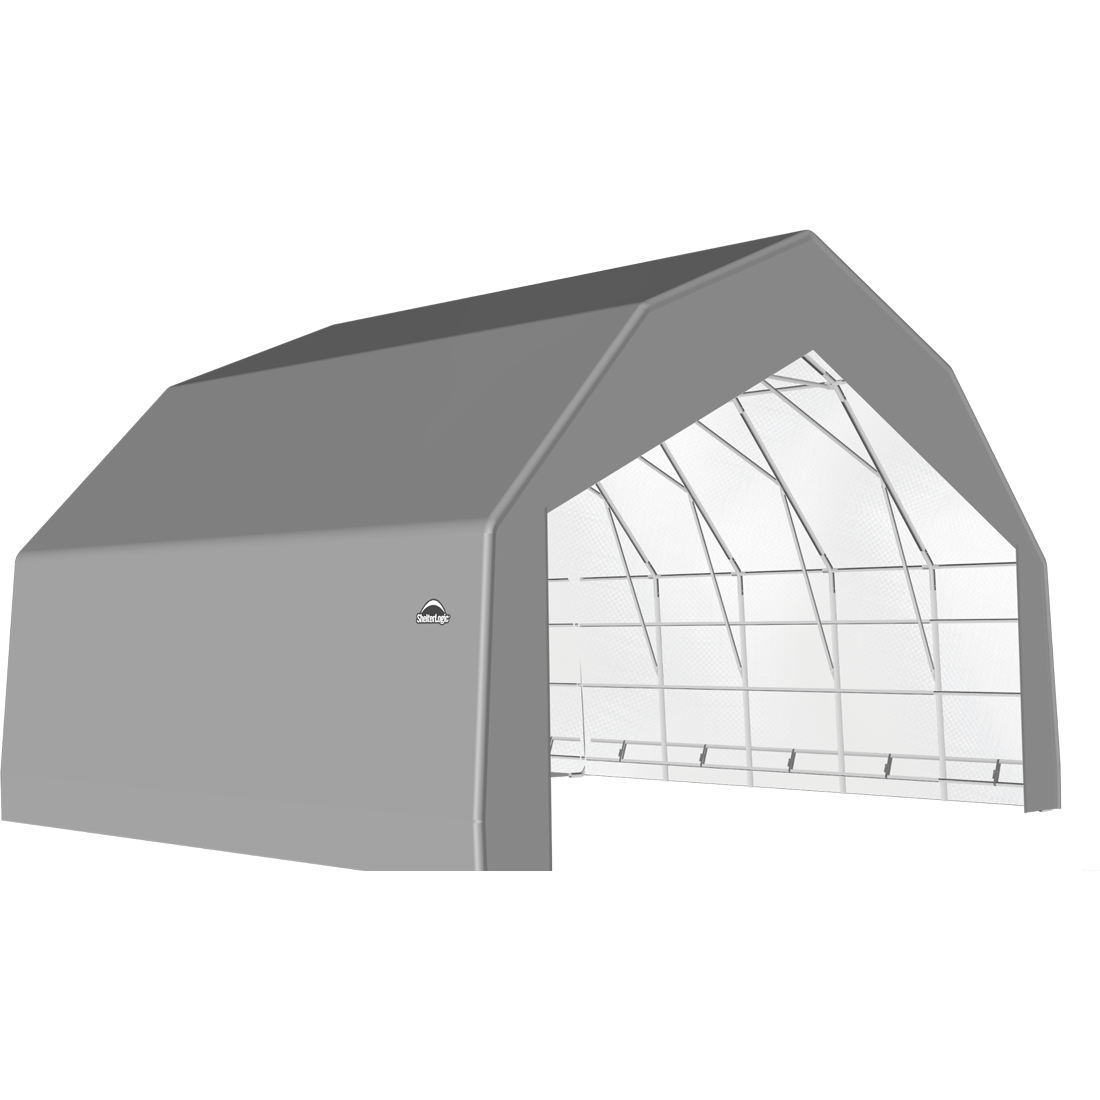 ShelterTech SP Series Barn Shelter, 30 ft. x 20 ft. x 18 ft. Heavy Duty PVC 14.5 oz. Gray